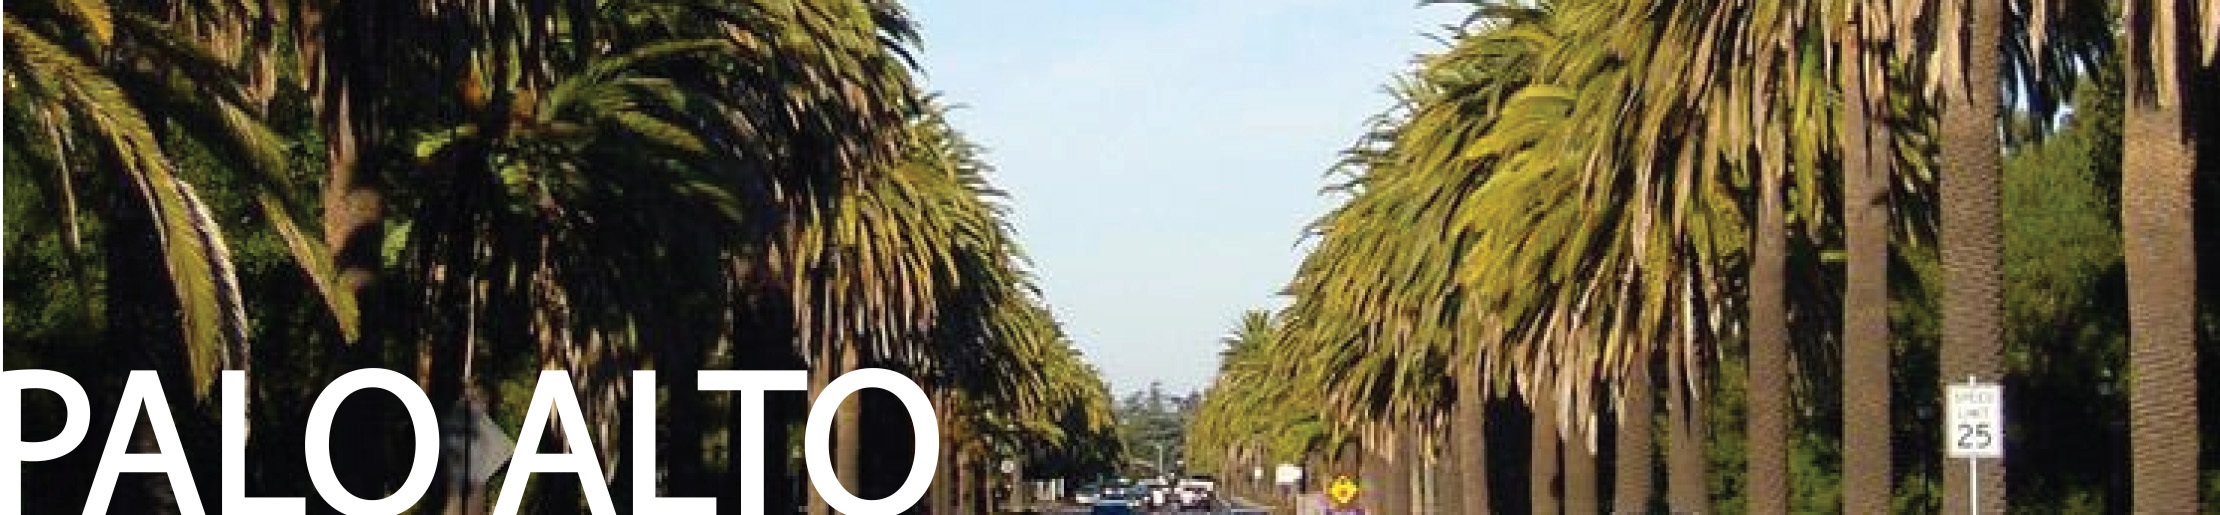 Palo Alto overlay